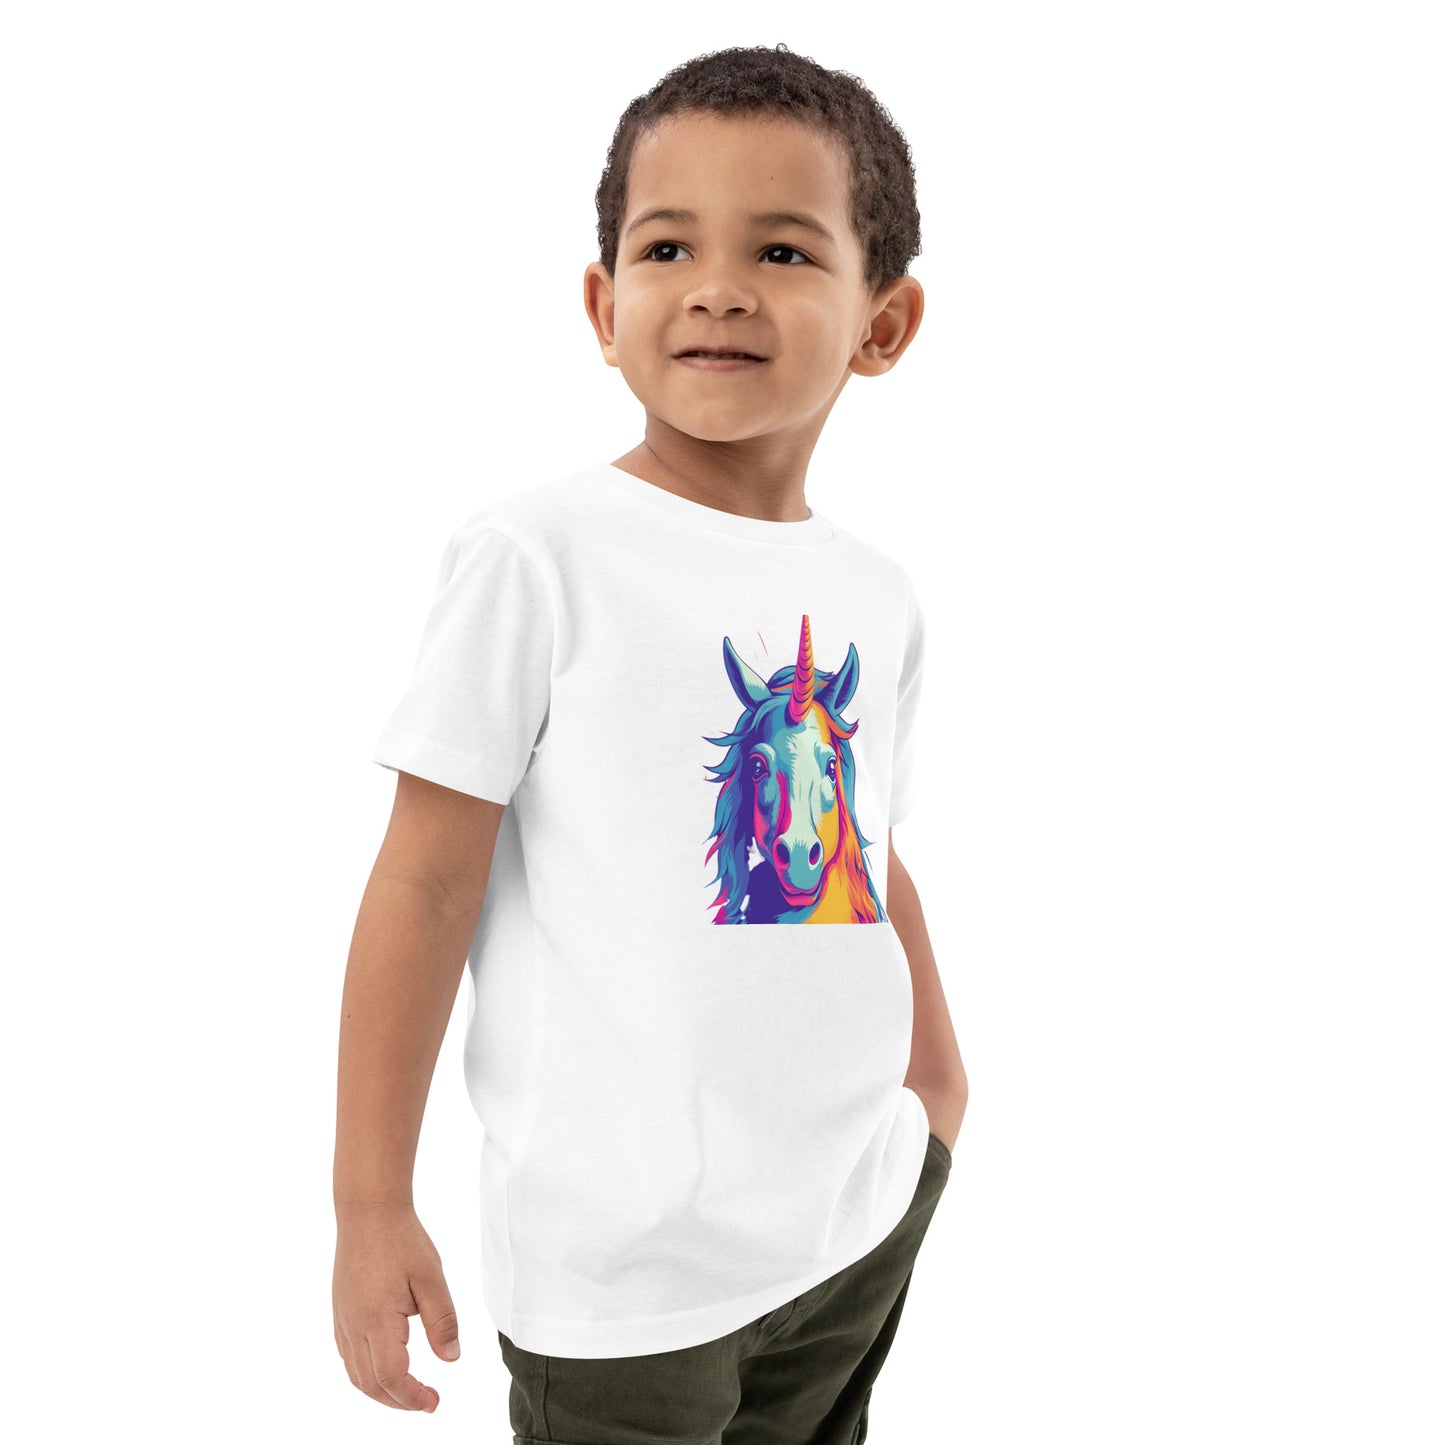 Unicorn Revolution - Organic Cotton Kids T-shirt